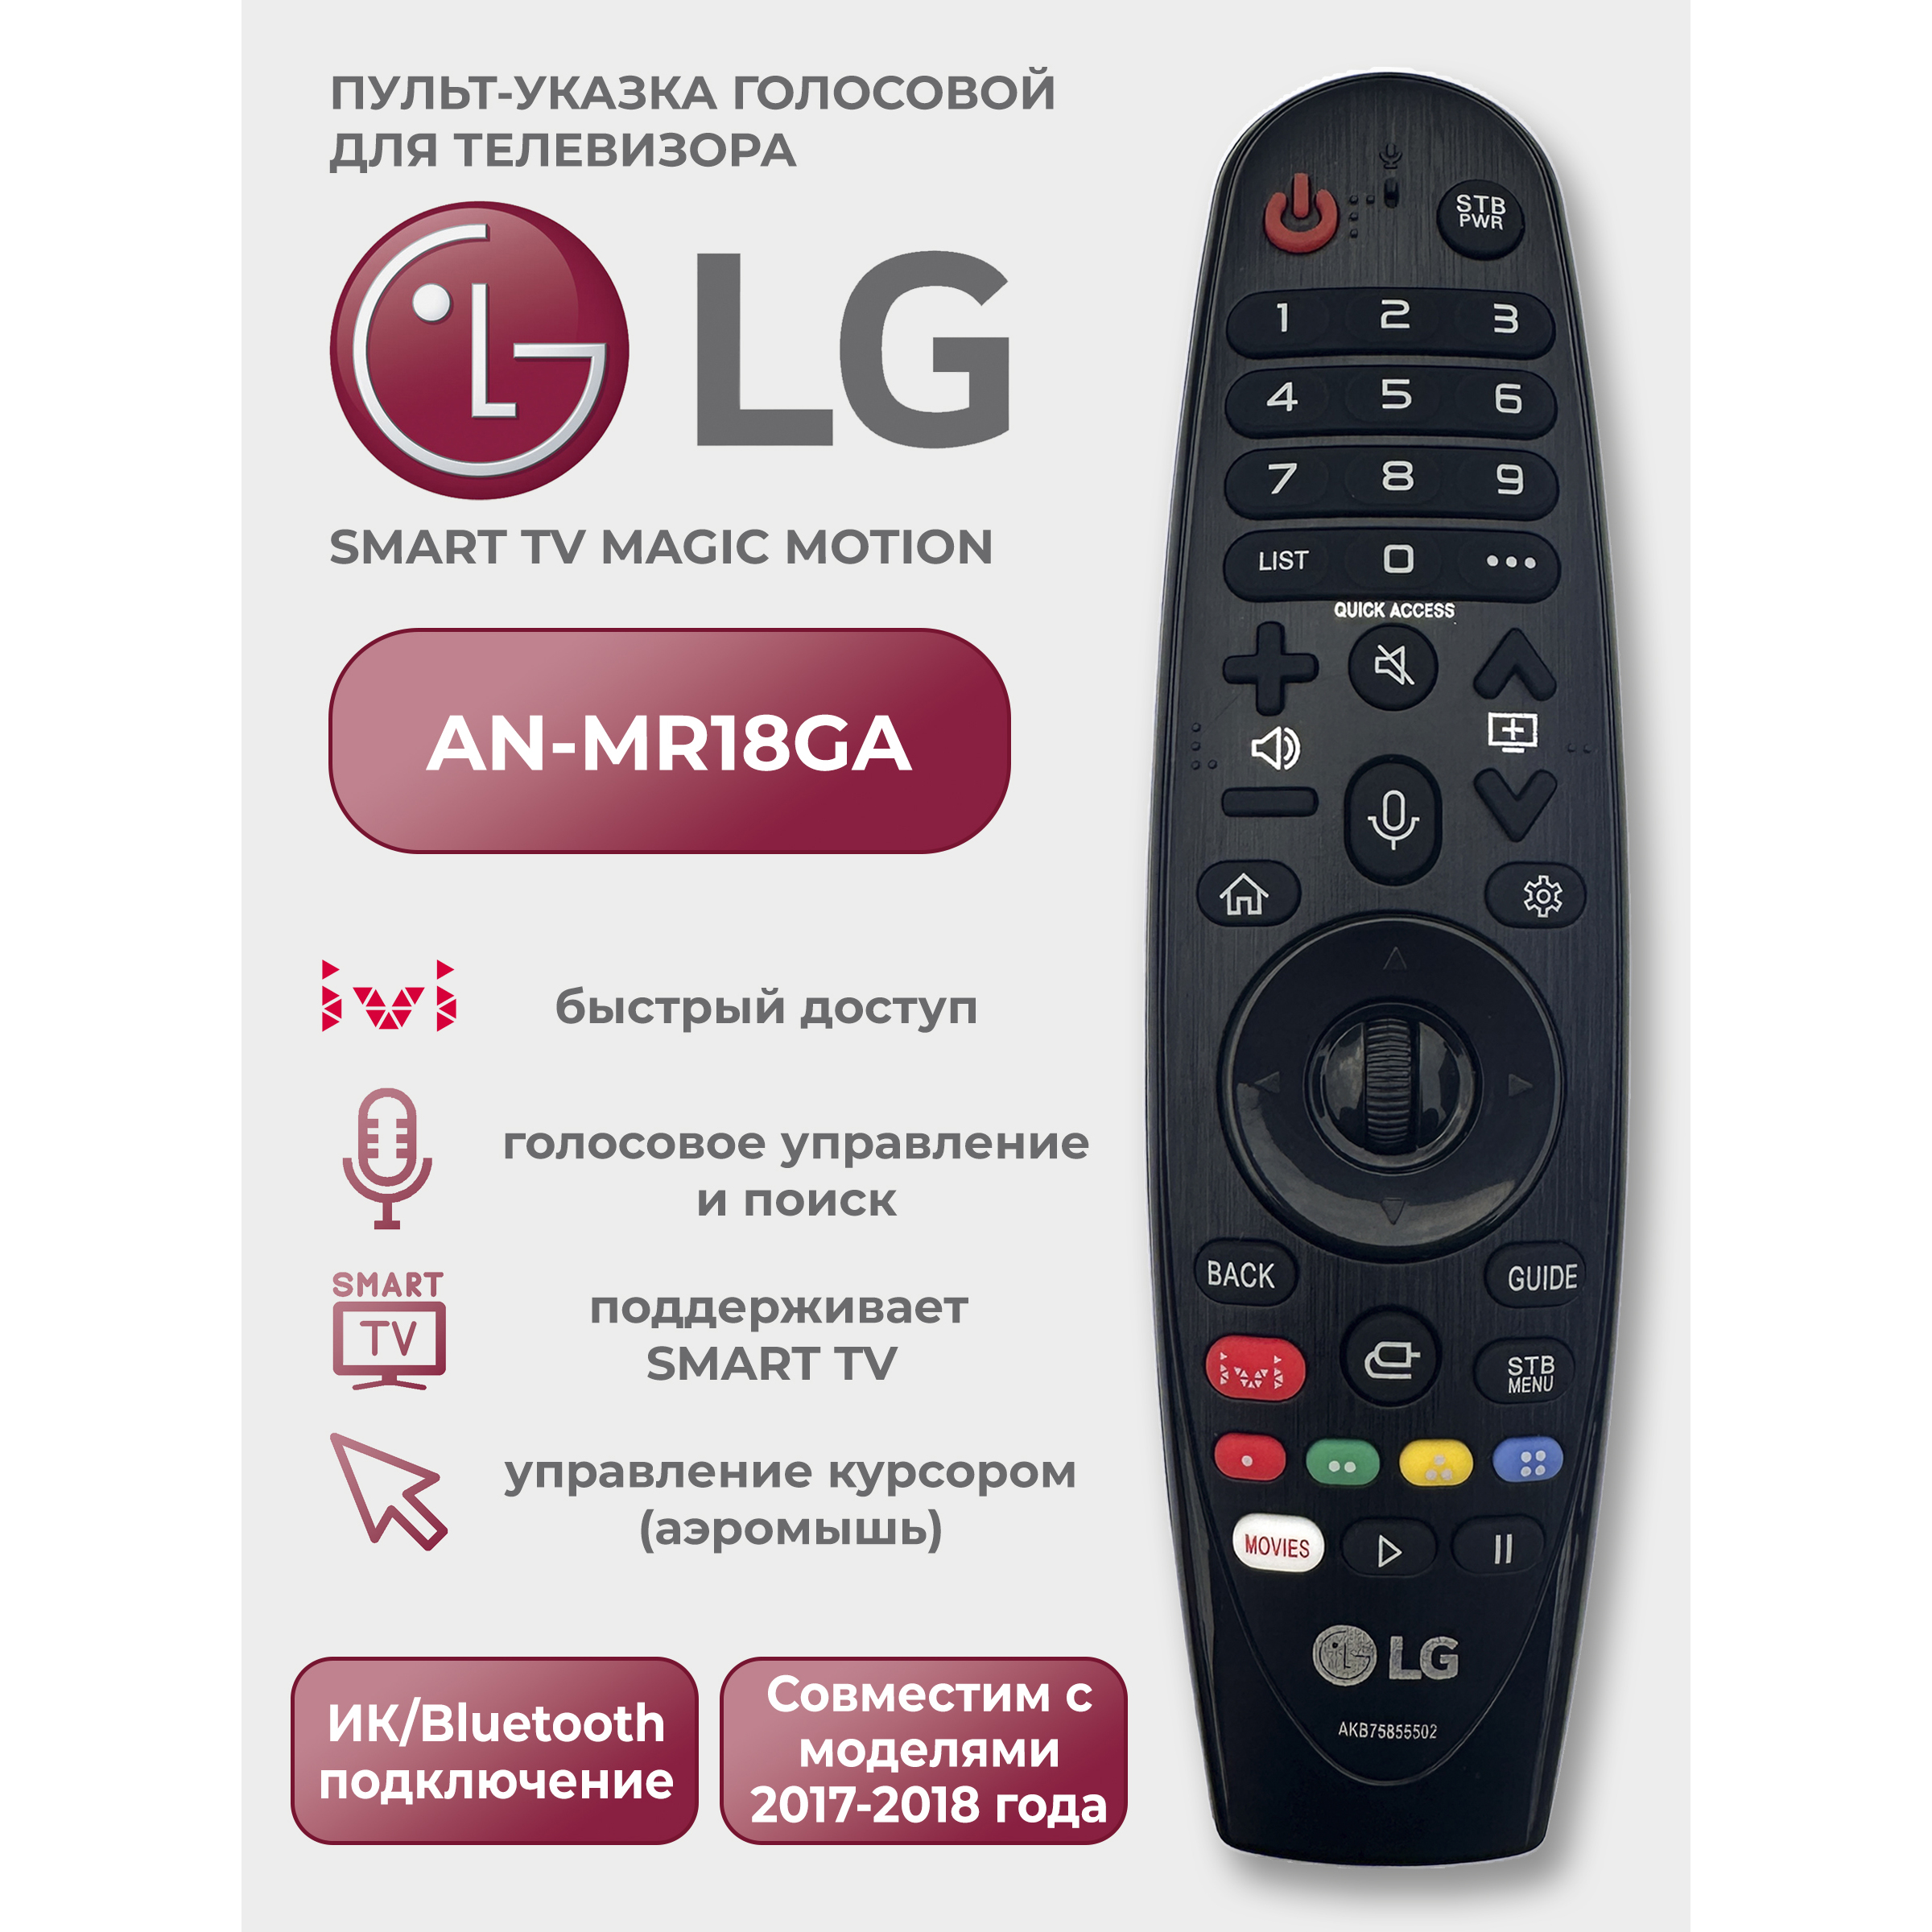 Пульт ду LG Smart TV Magic Motion AN-MR18